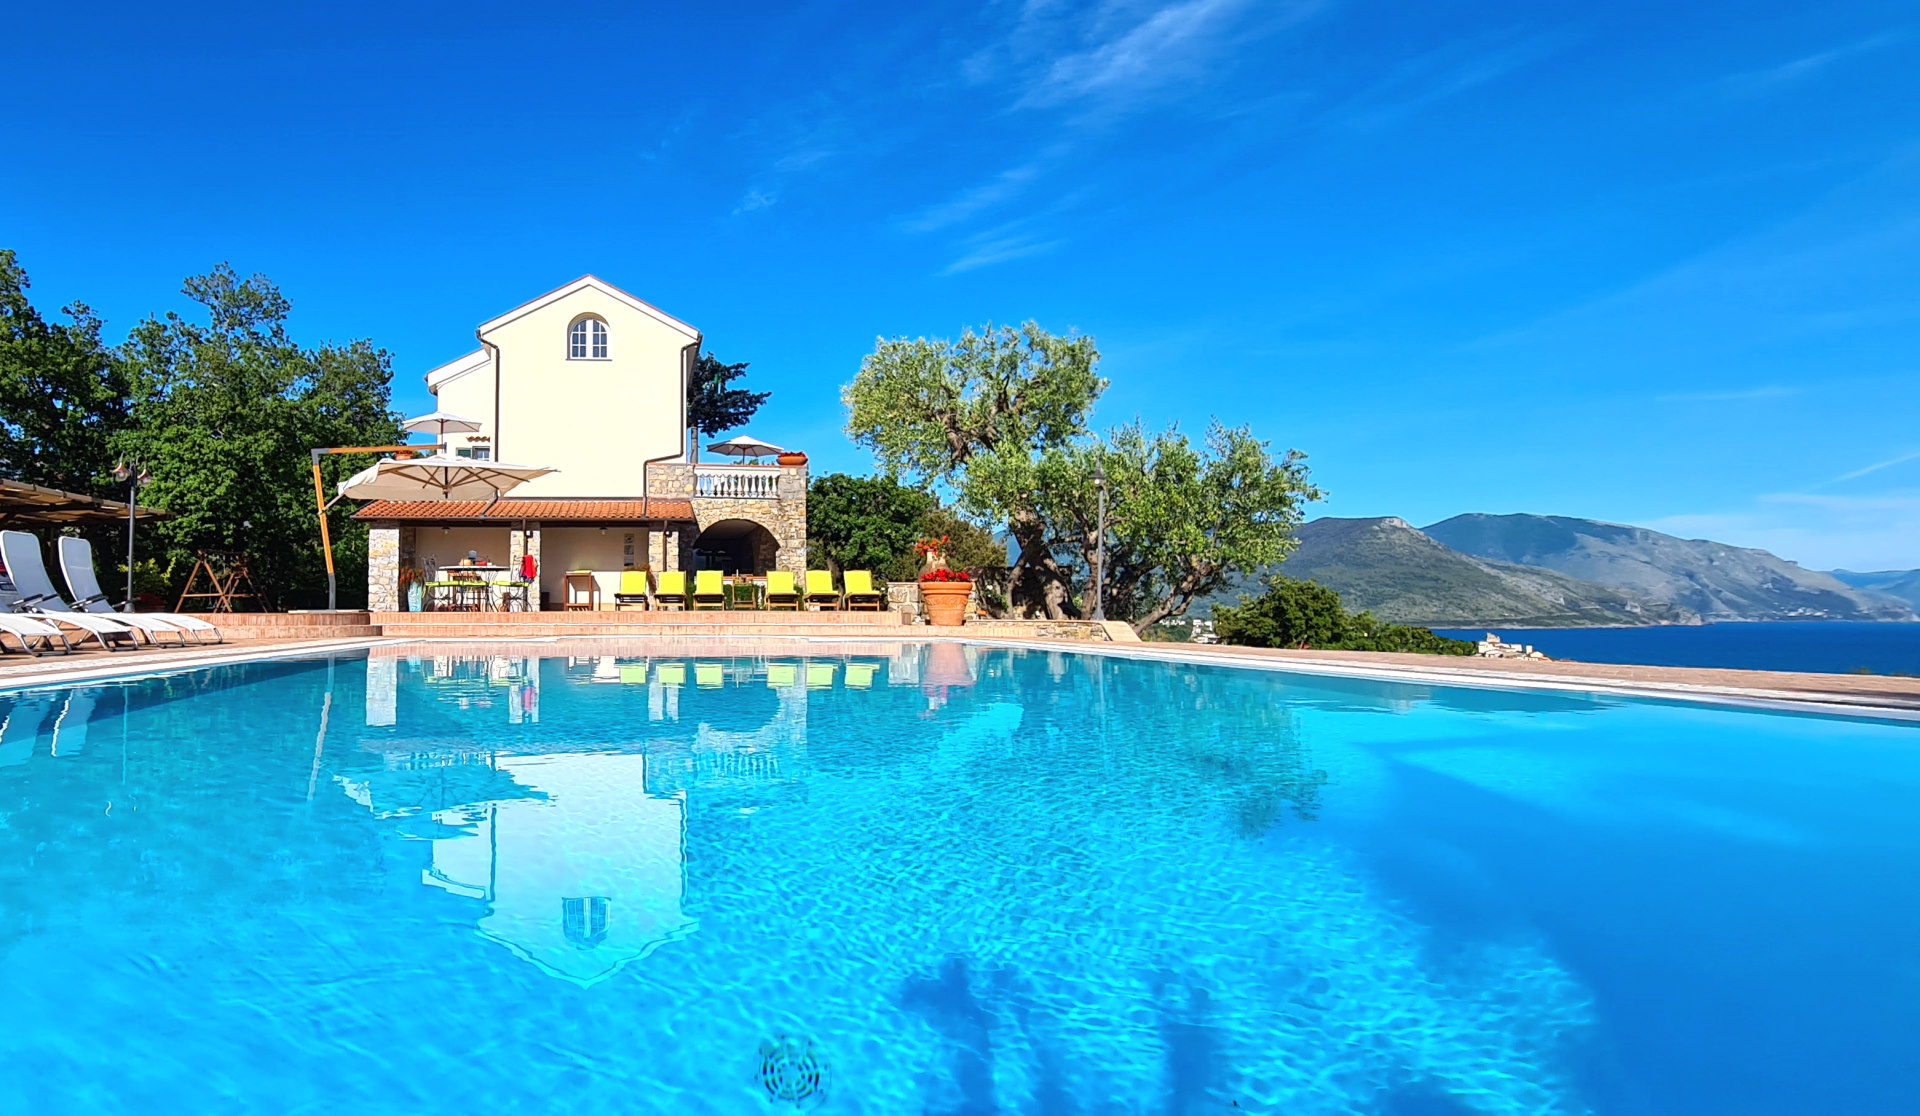 Rent villa with pool Cilento Palinuro Maratea Camerota